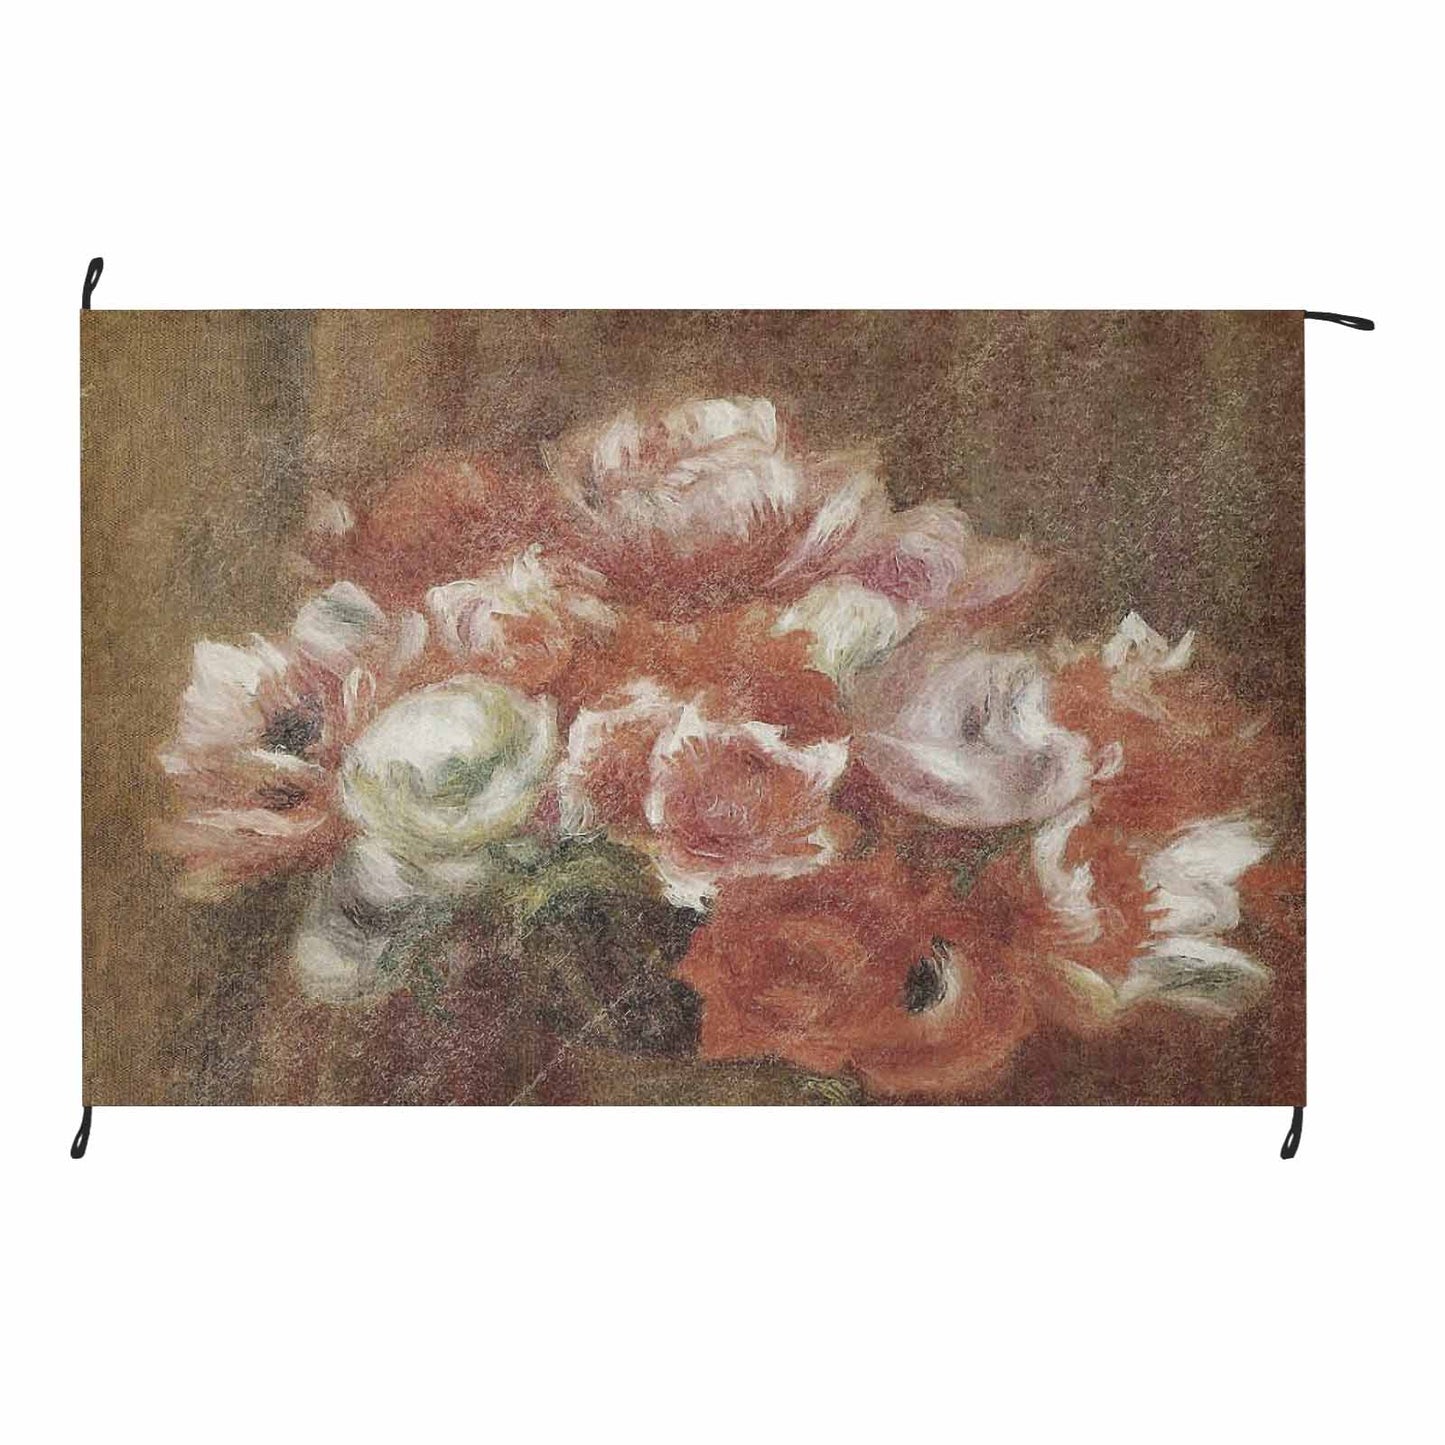 Vintage Floral waterproof picnic mat, 81 x 55in, Design 15